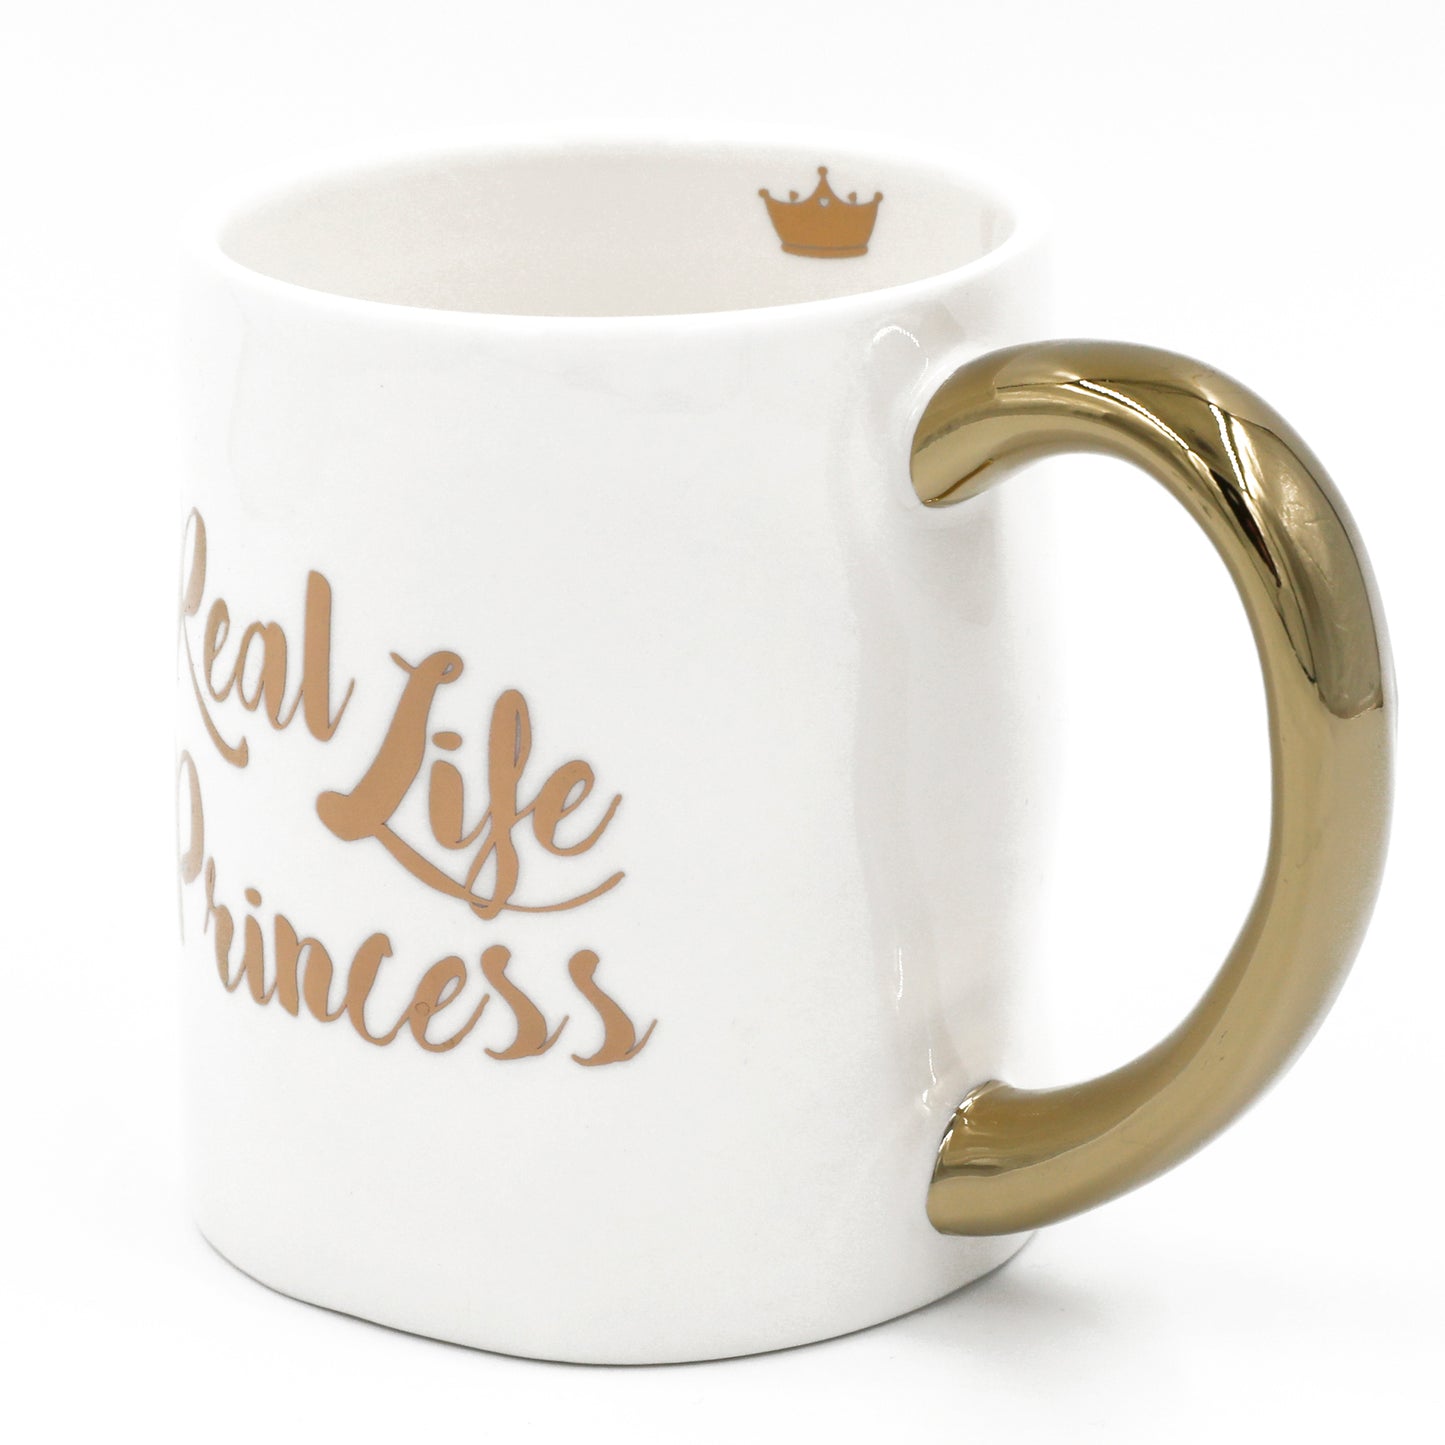 13.5 oz Stoneware Ceramic Mug With Sayings,"Real Life Princess"